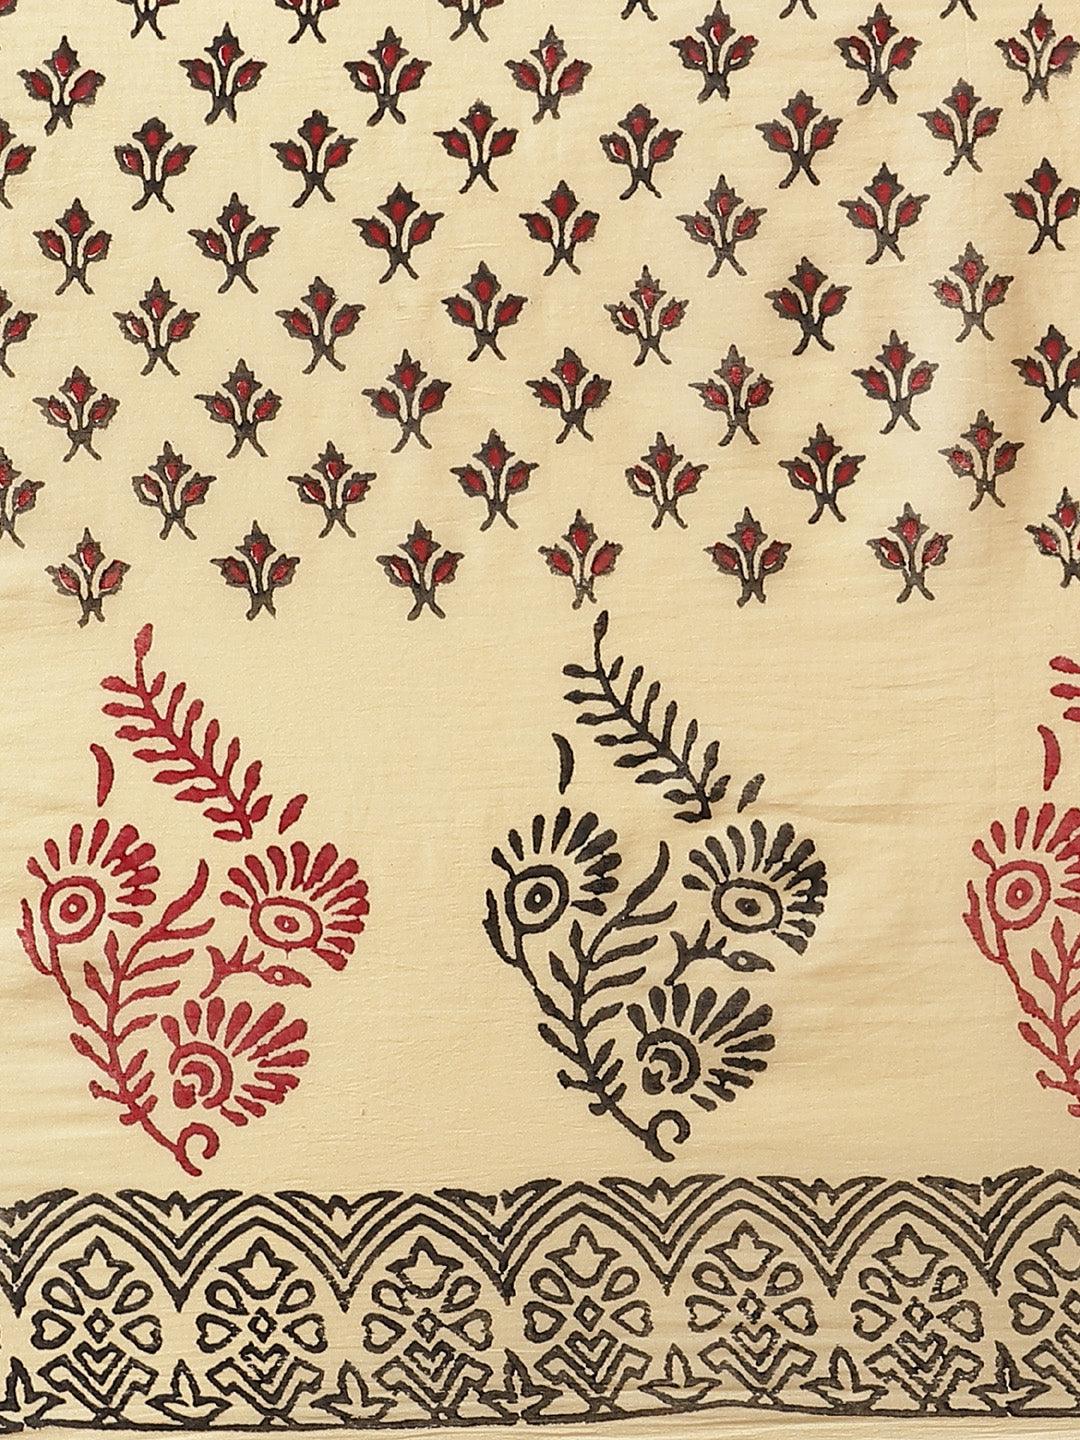 Beige and Black, Kalakari India Cotton Beige Hand crafted saree with blouse HUPASA0013 - Kalakari India